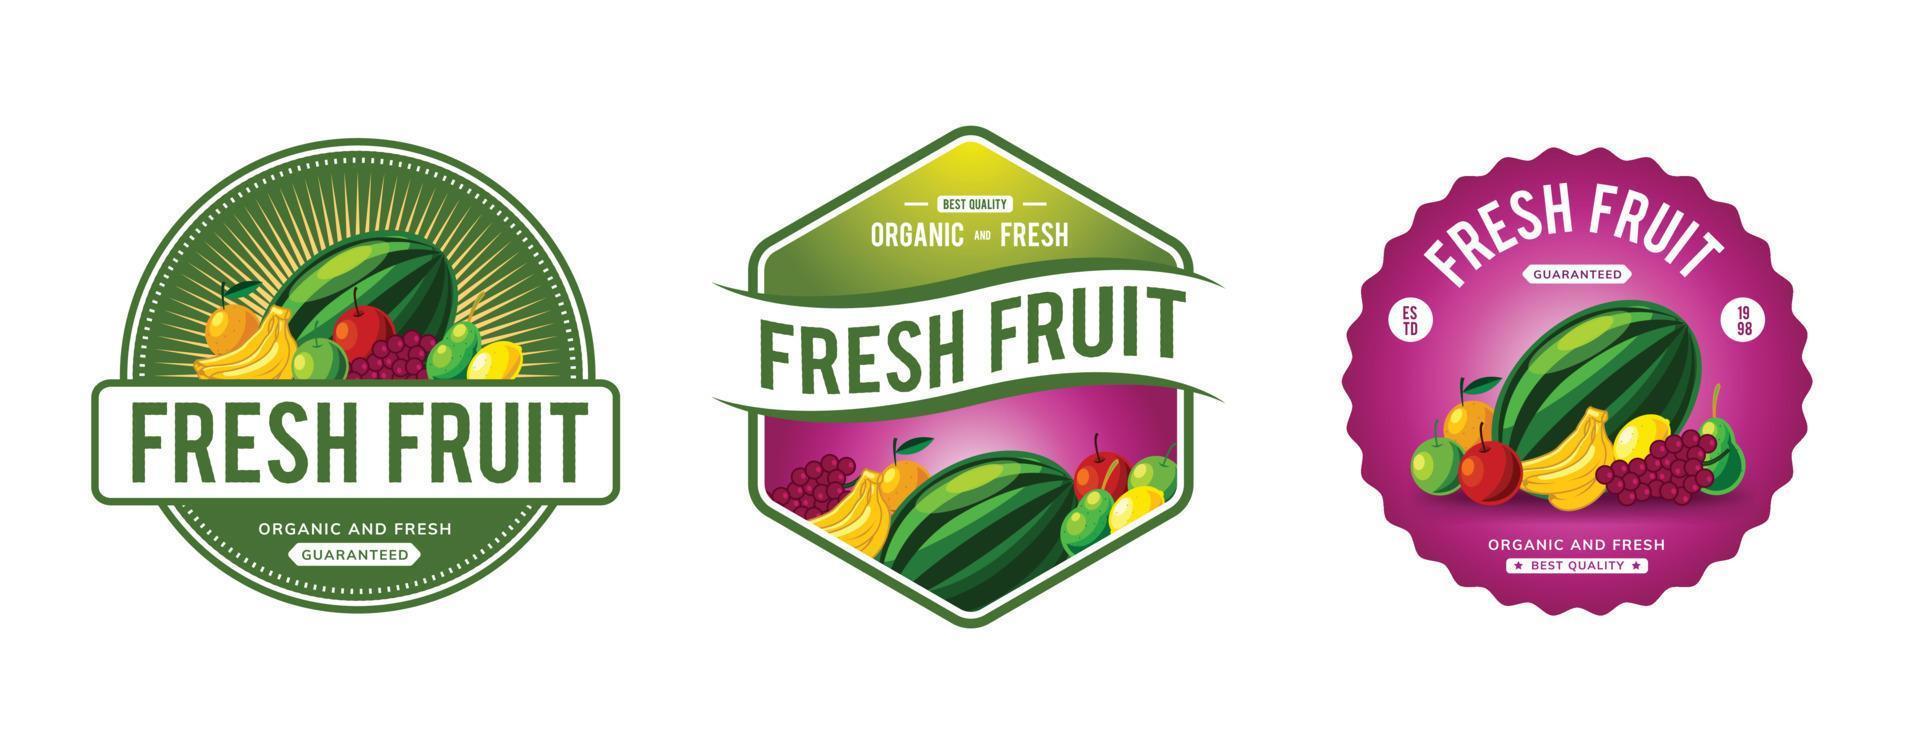 logo de fruits frais vecteur